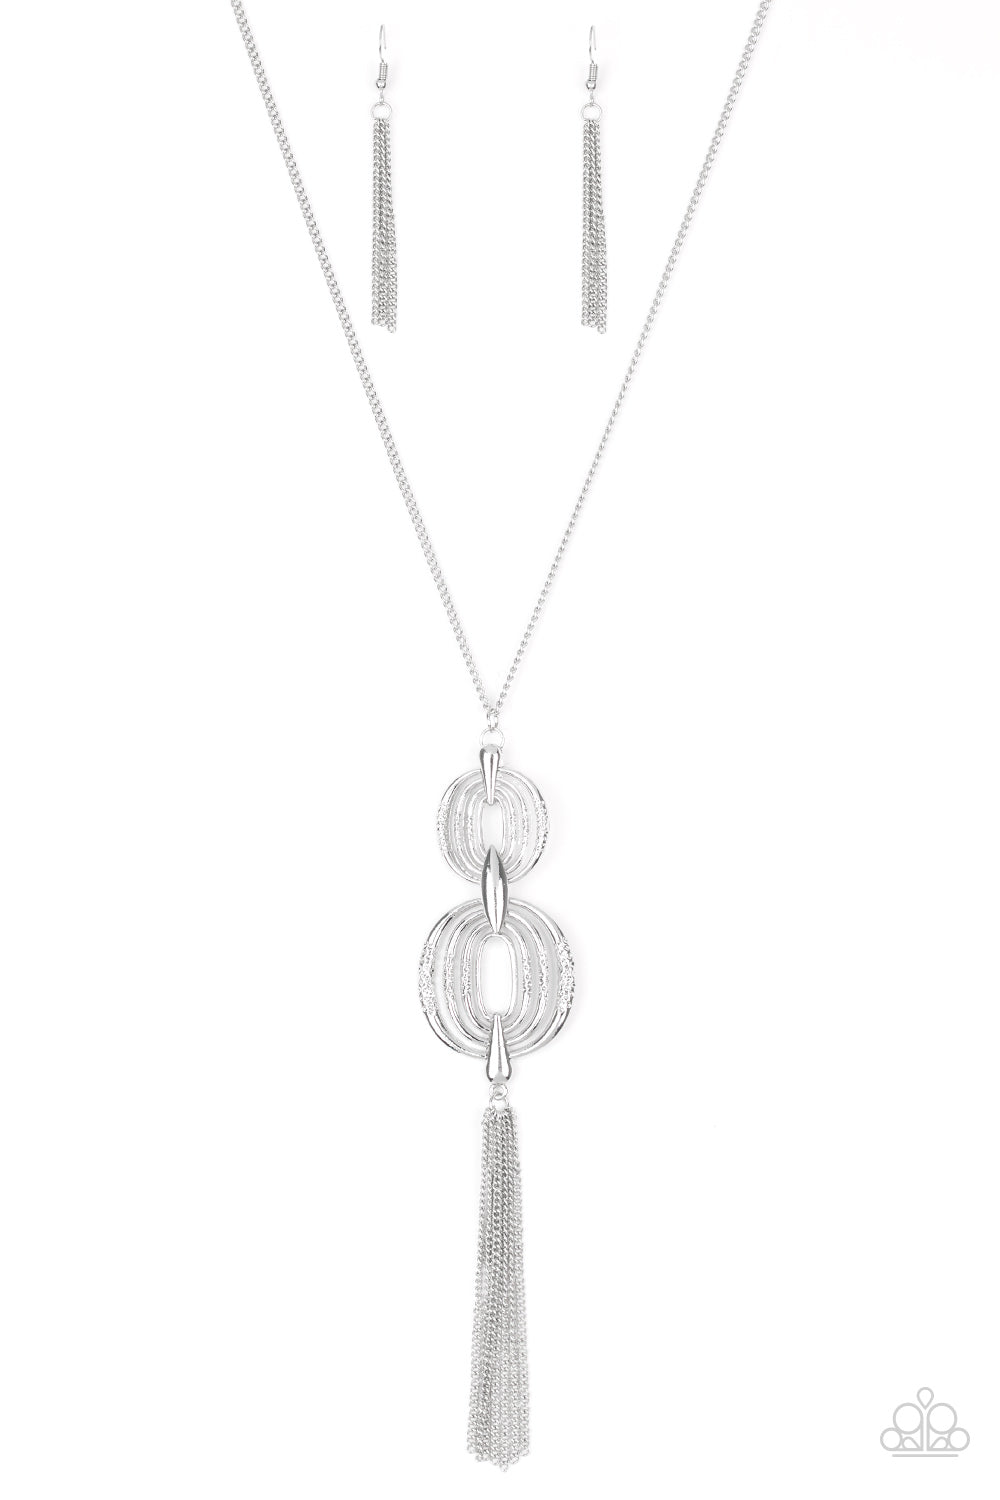 Timelessly Tasseled - Silver Necklace Set